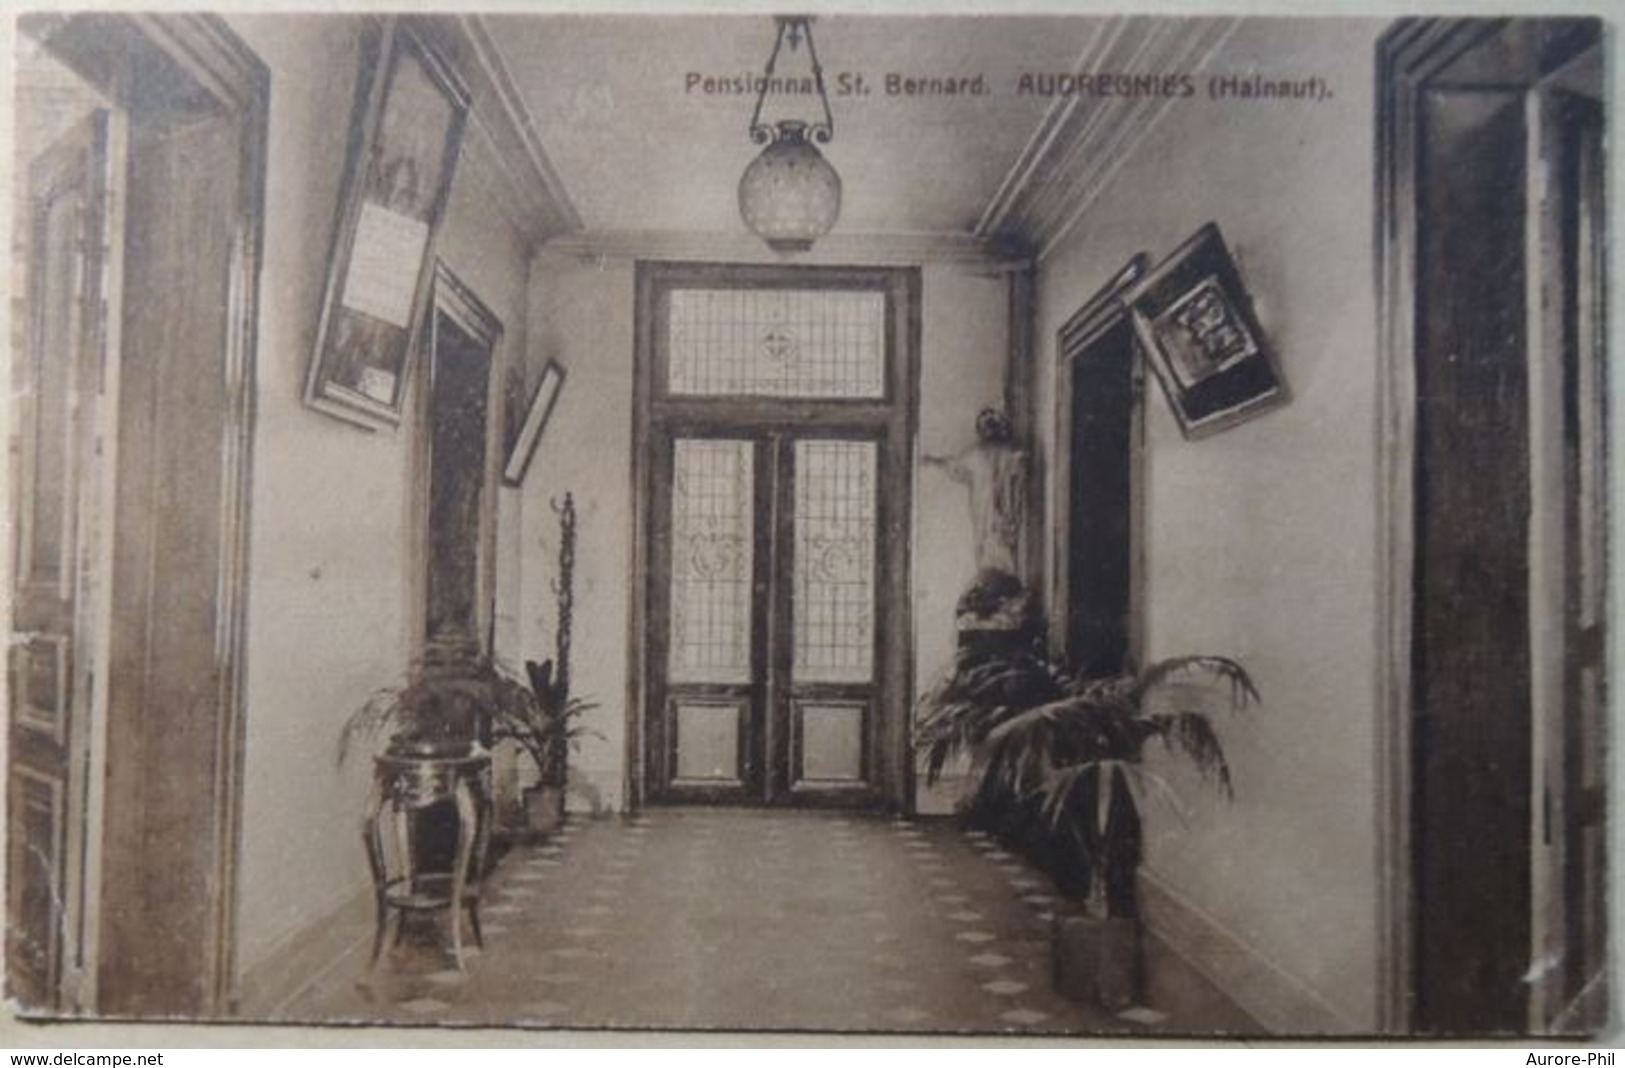 Audregnies Pensionnat St.Bernard (Timbre Léopold II Profil Gauche Grosse Barbe 1905) - Quiévrain